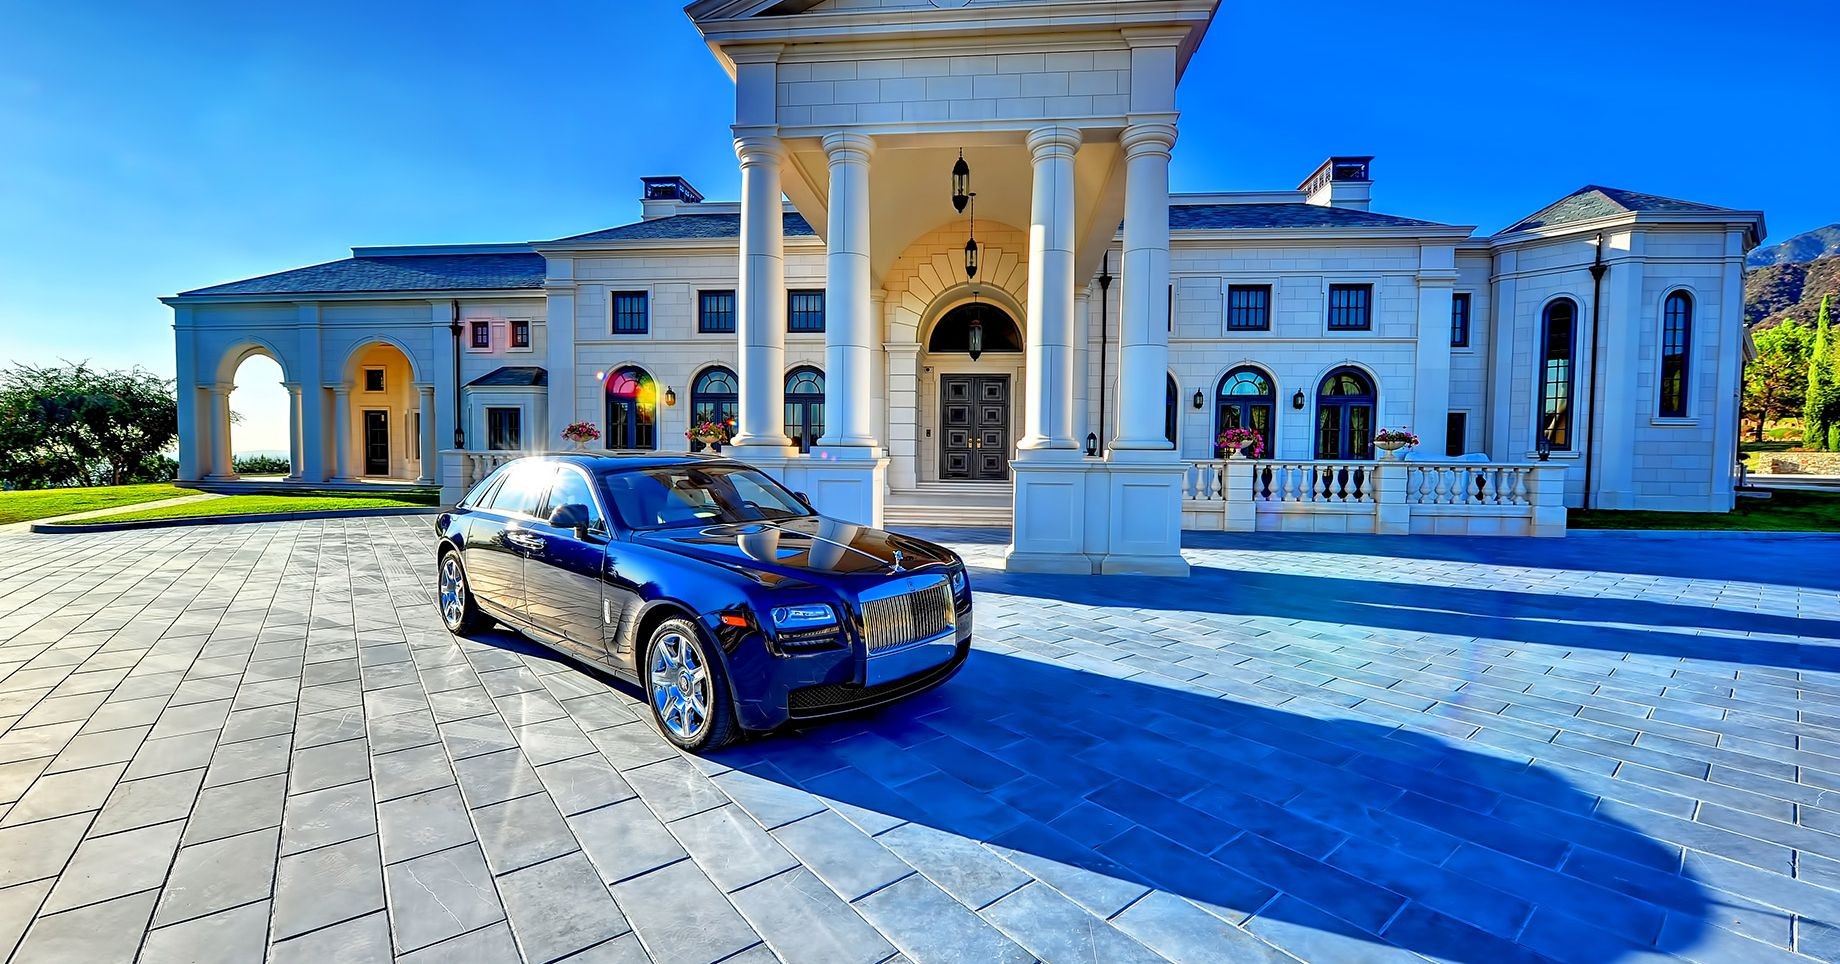 Luxury House And Car Wallpaper Baltana